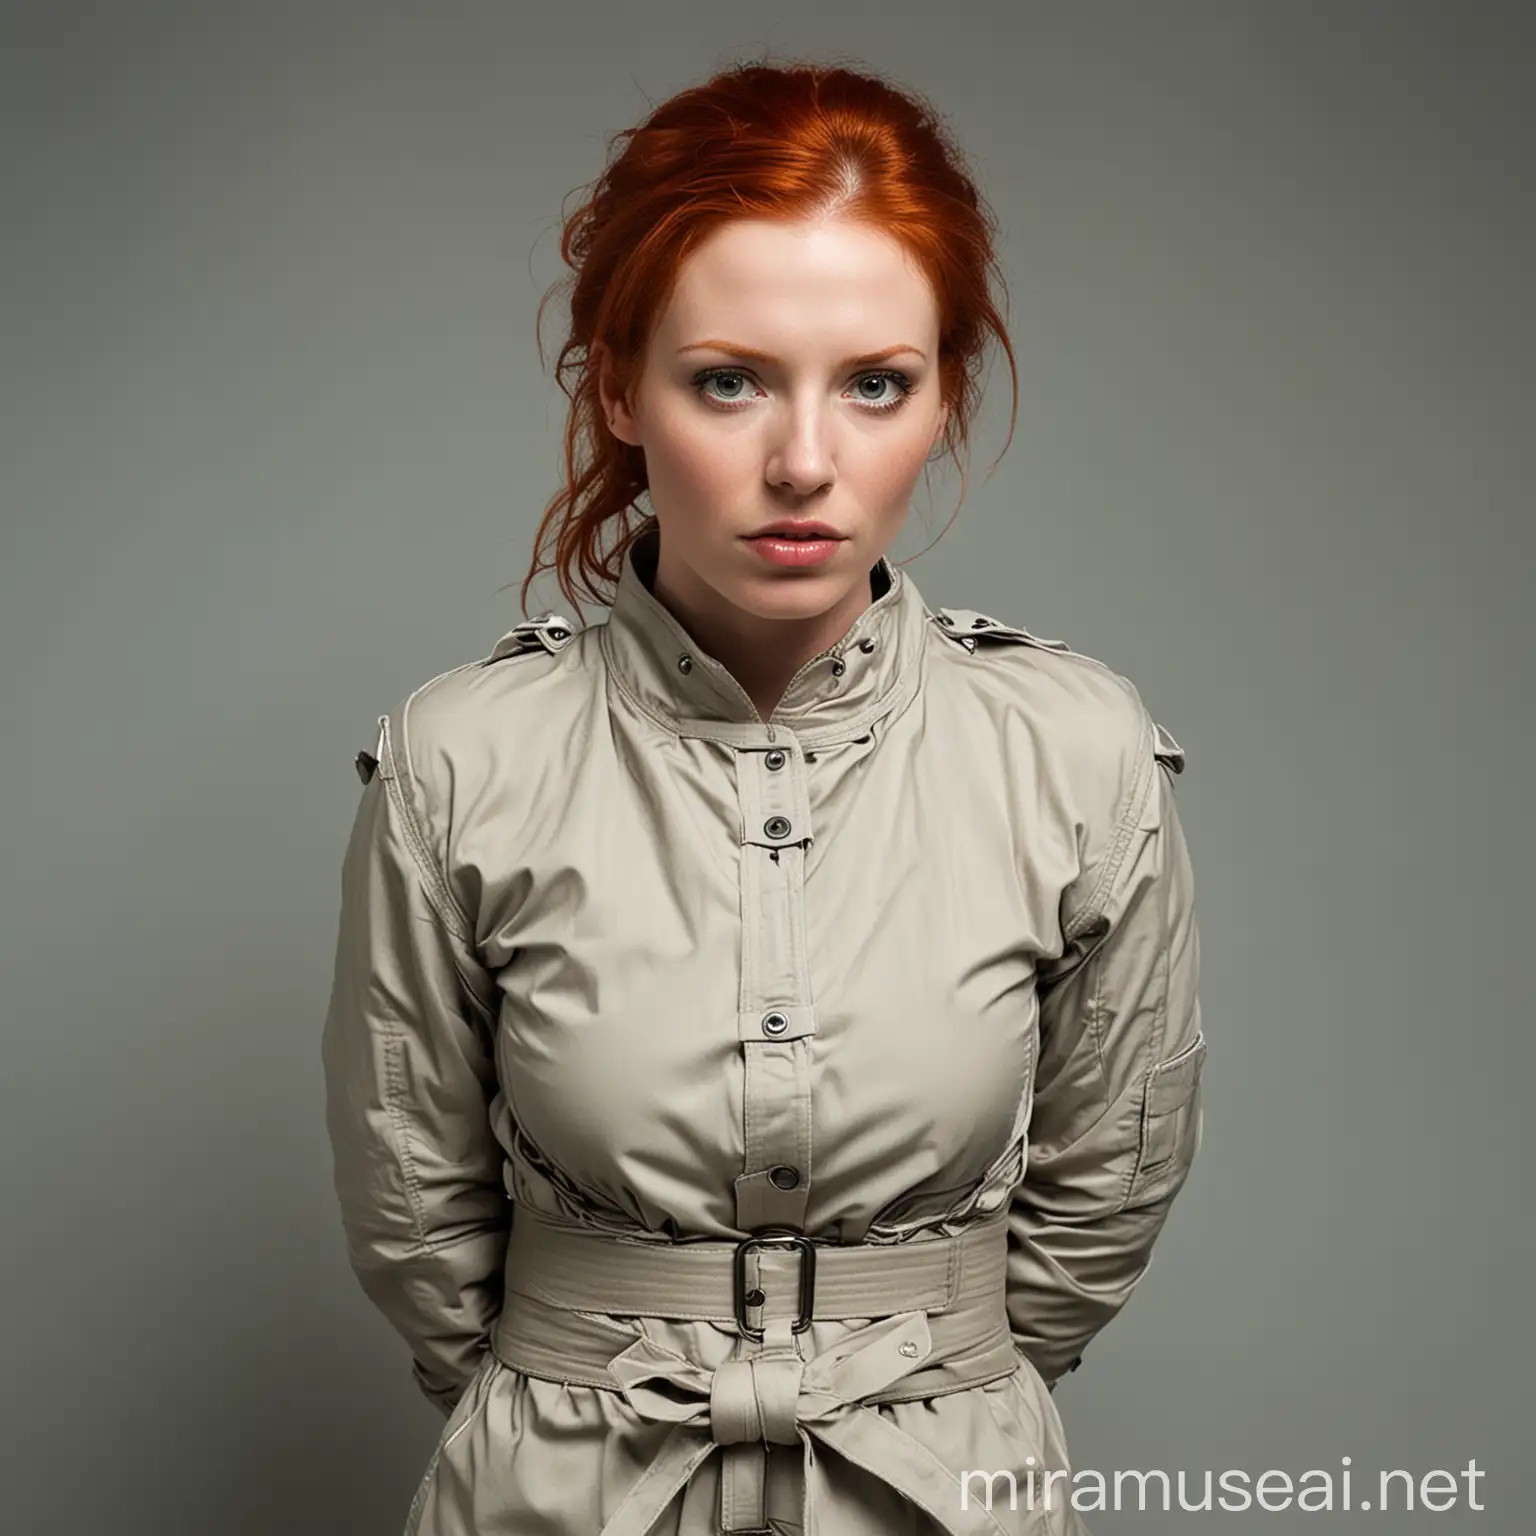 beautiful redheaded woman, straitjacket